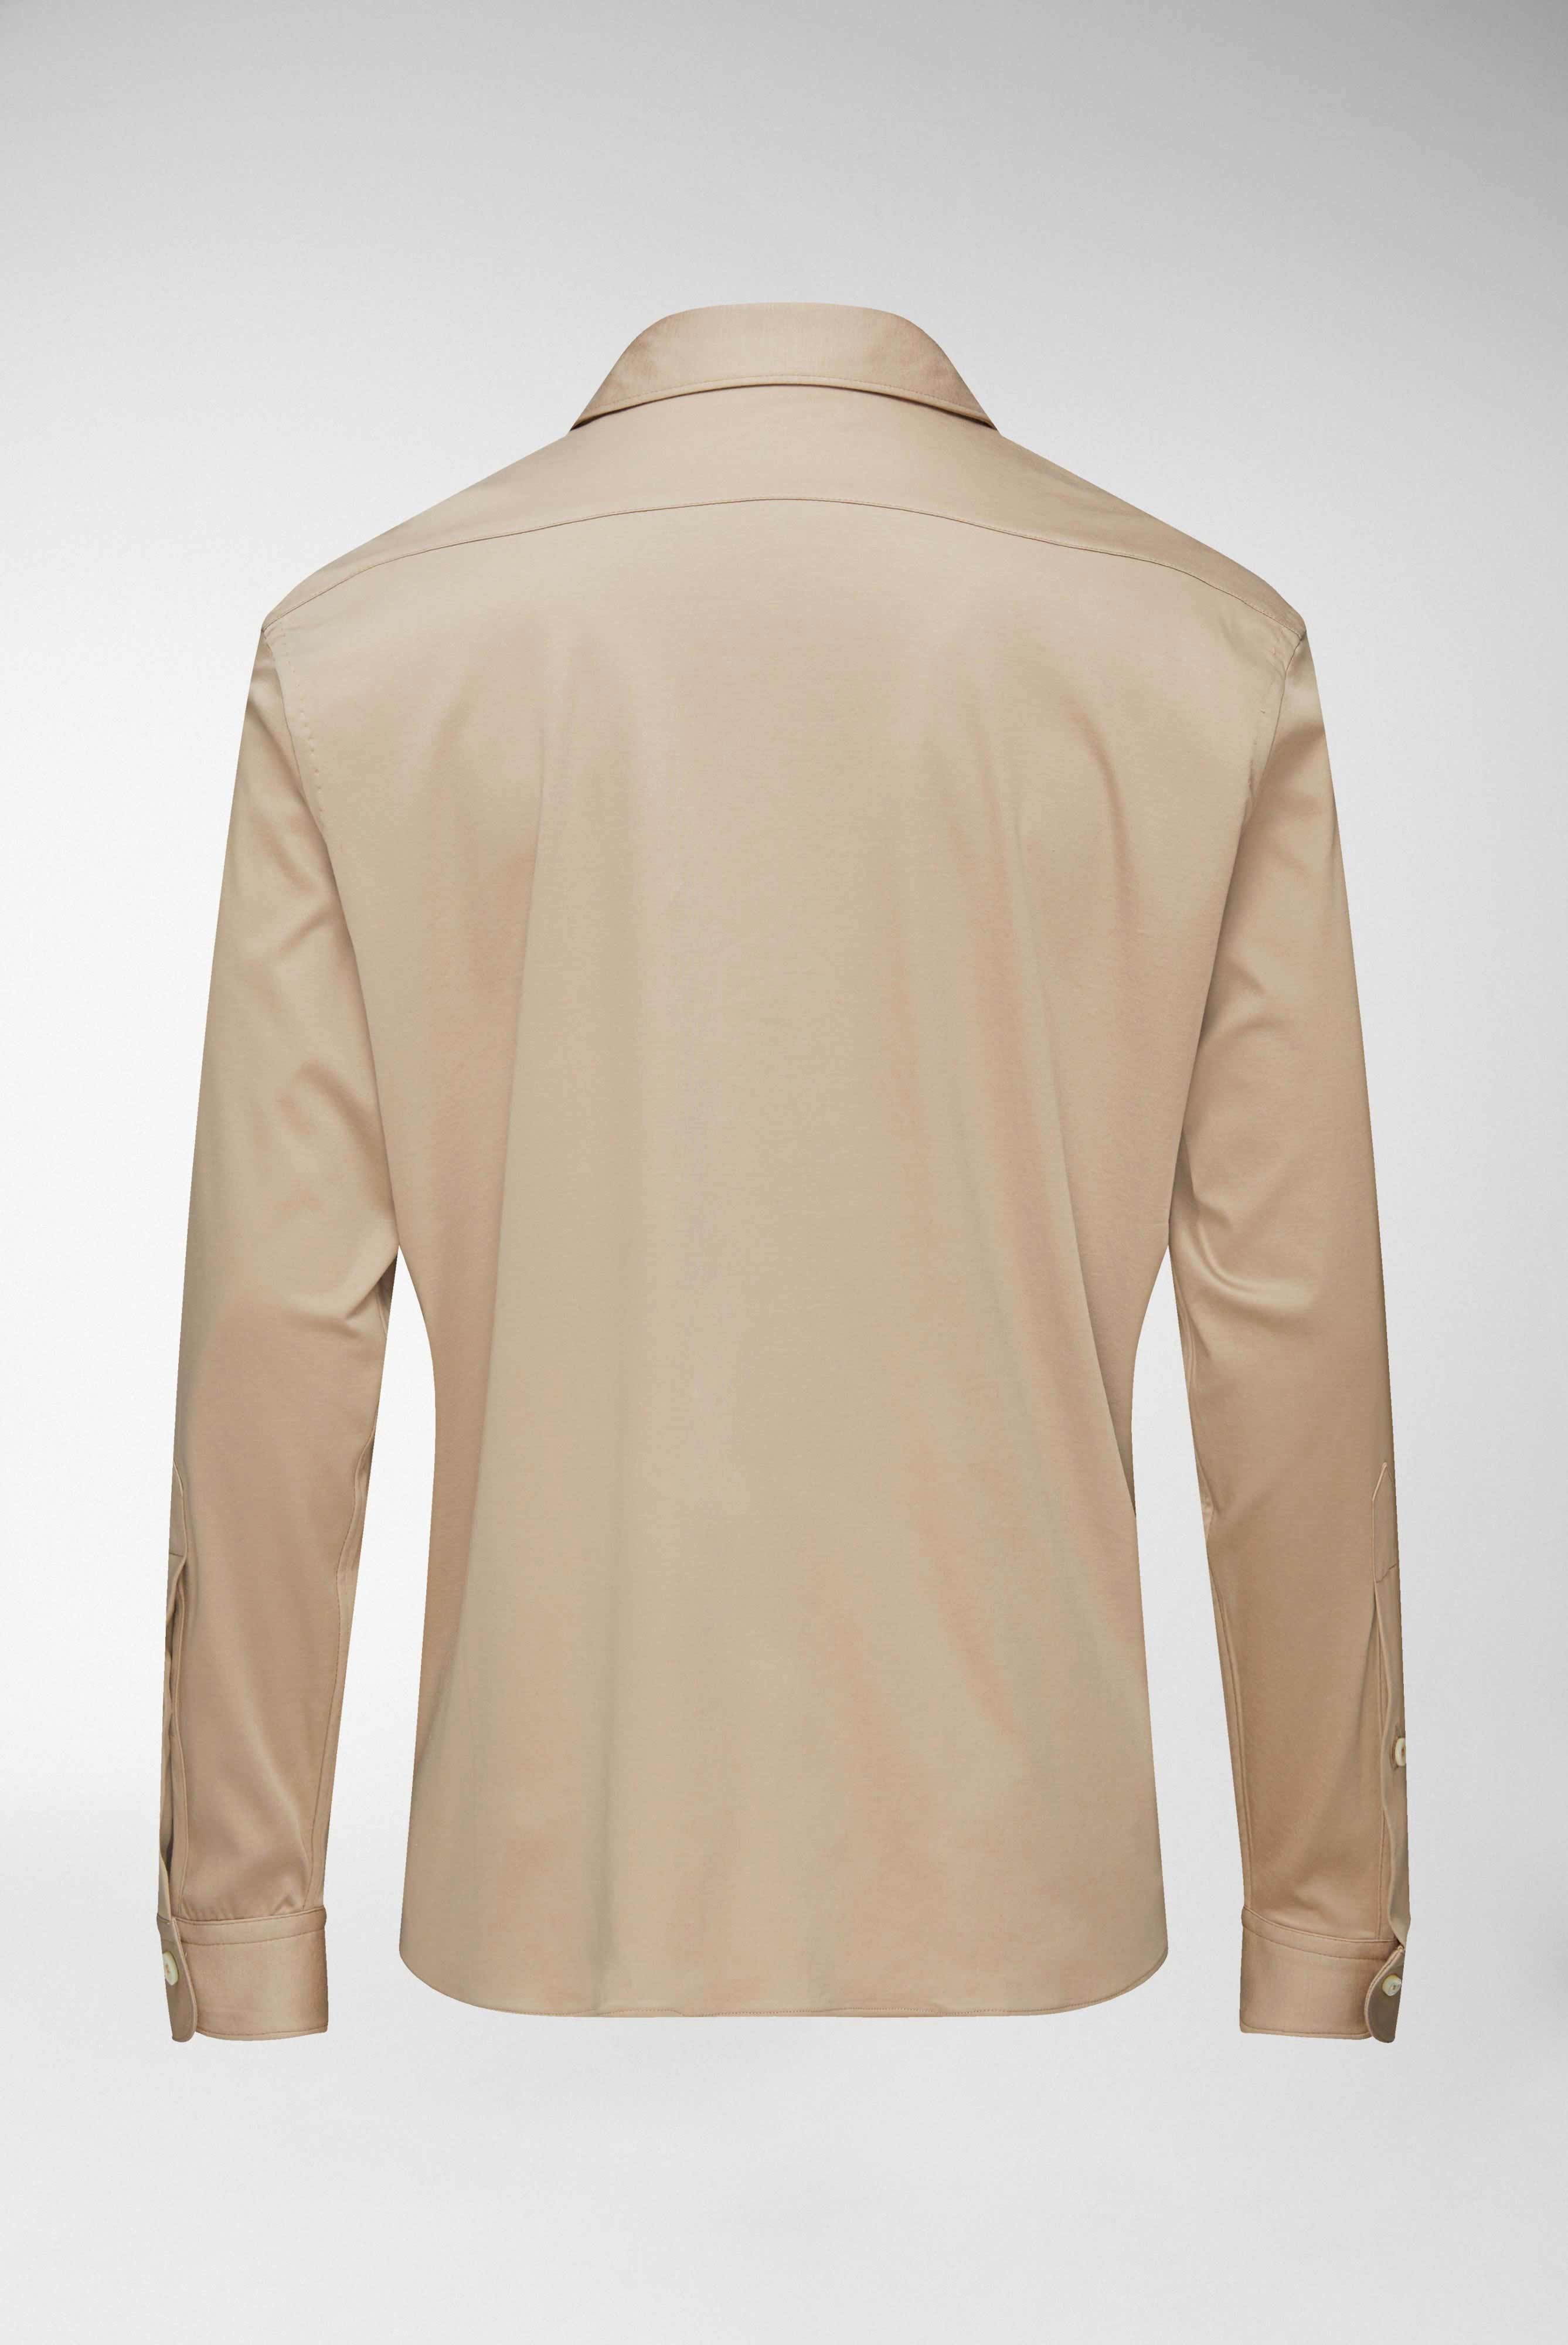 Casual Shirts+Jersey Shirt Swiss Cotton Tailor Fit+20.1683.UC.180031.140.XL